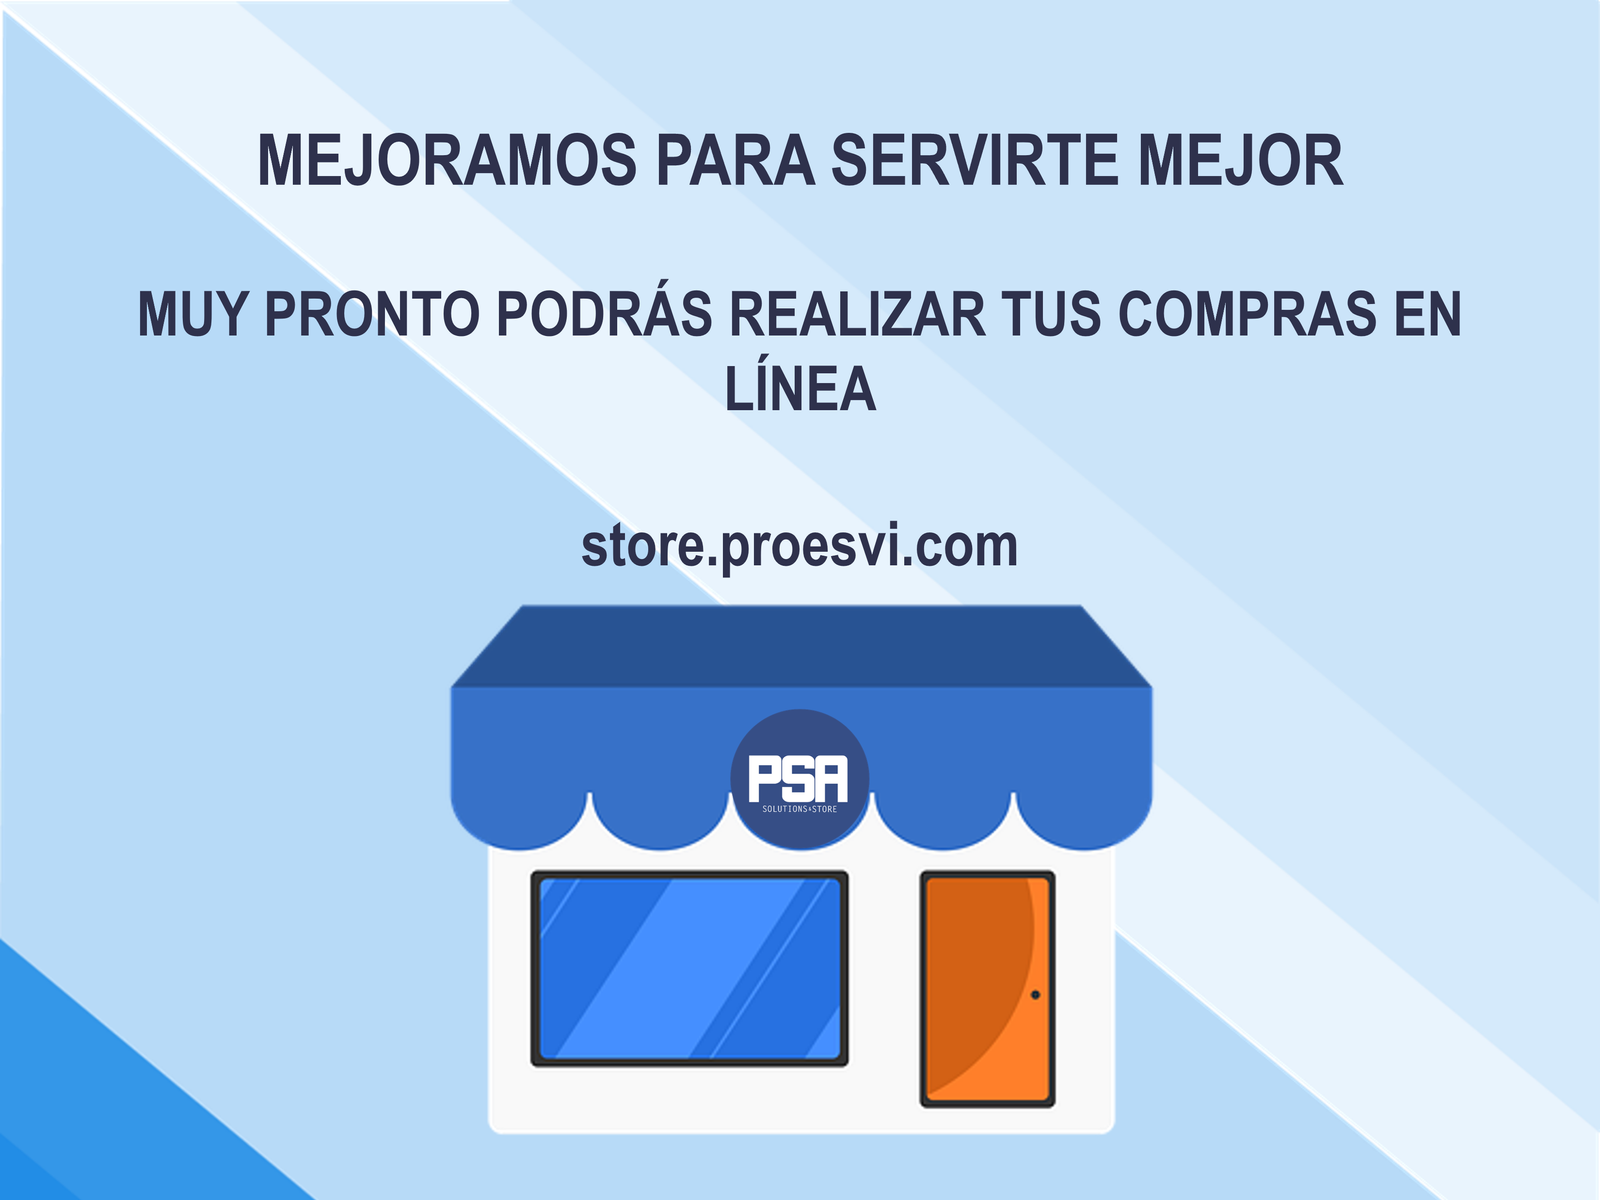 La tienda en línea de Proesvi